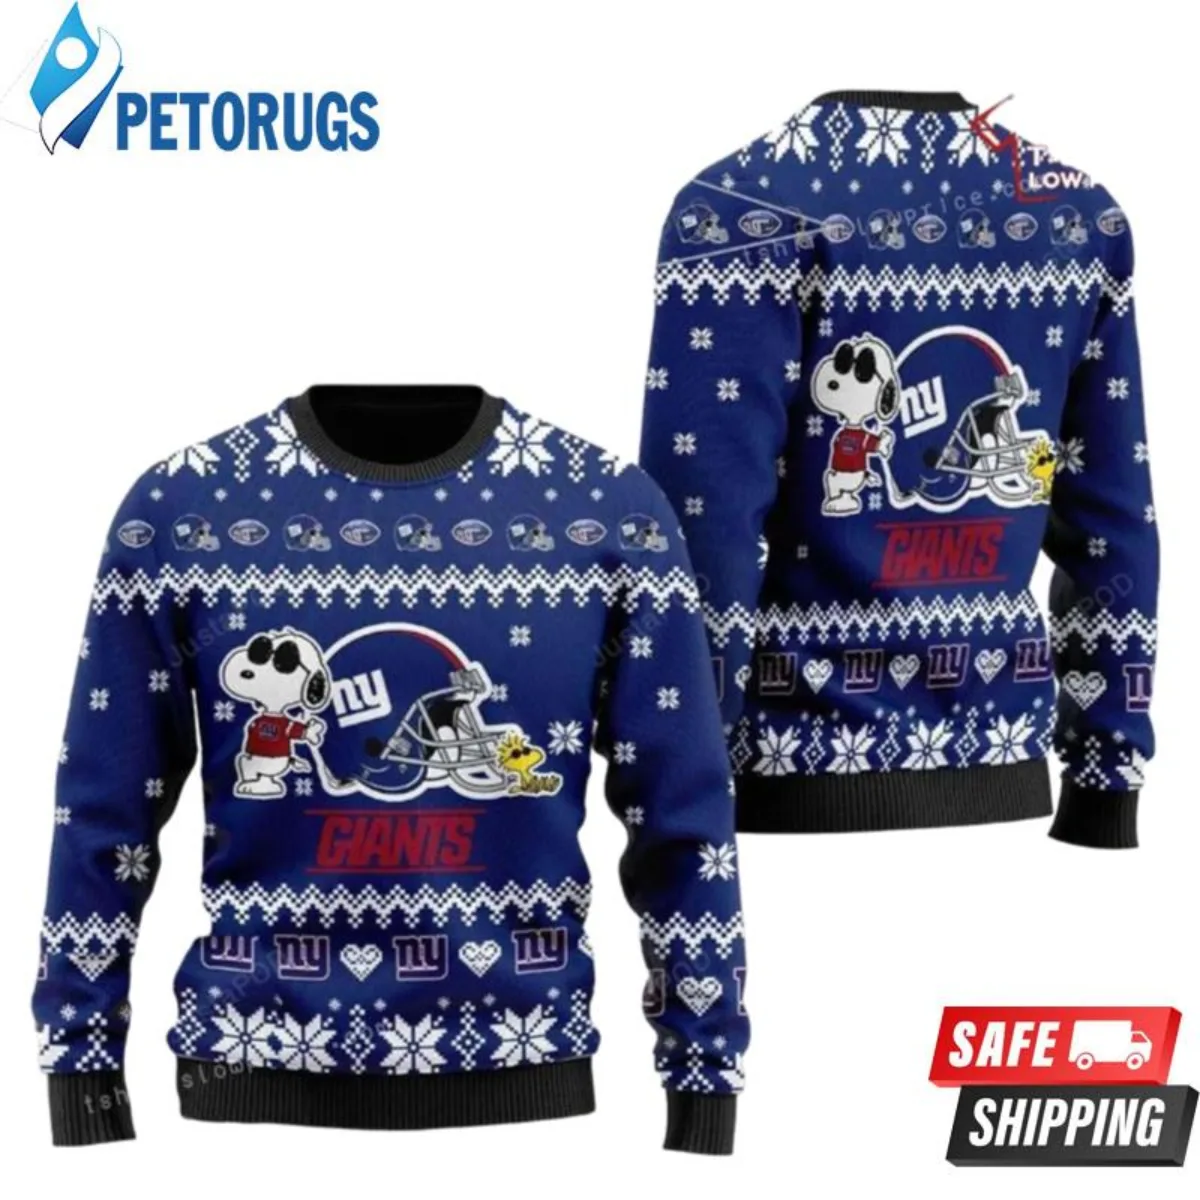 The Snoopy Football Helmet New York Giants Ugly Christmas Sweaters - Peto  Rugs